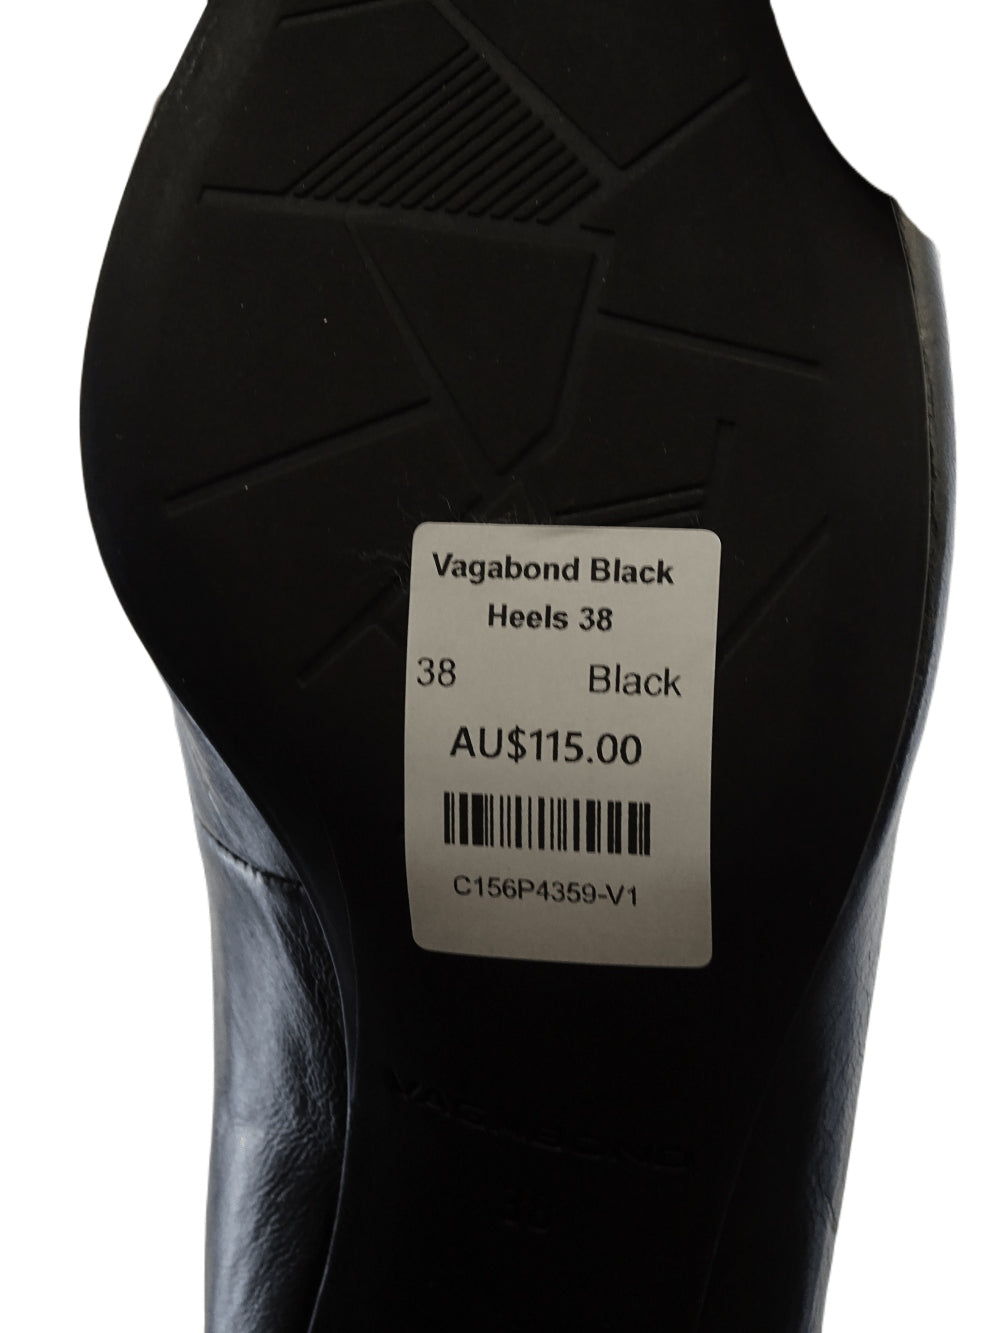 Vagabond Black Heels 38